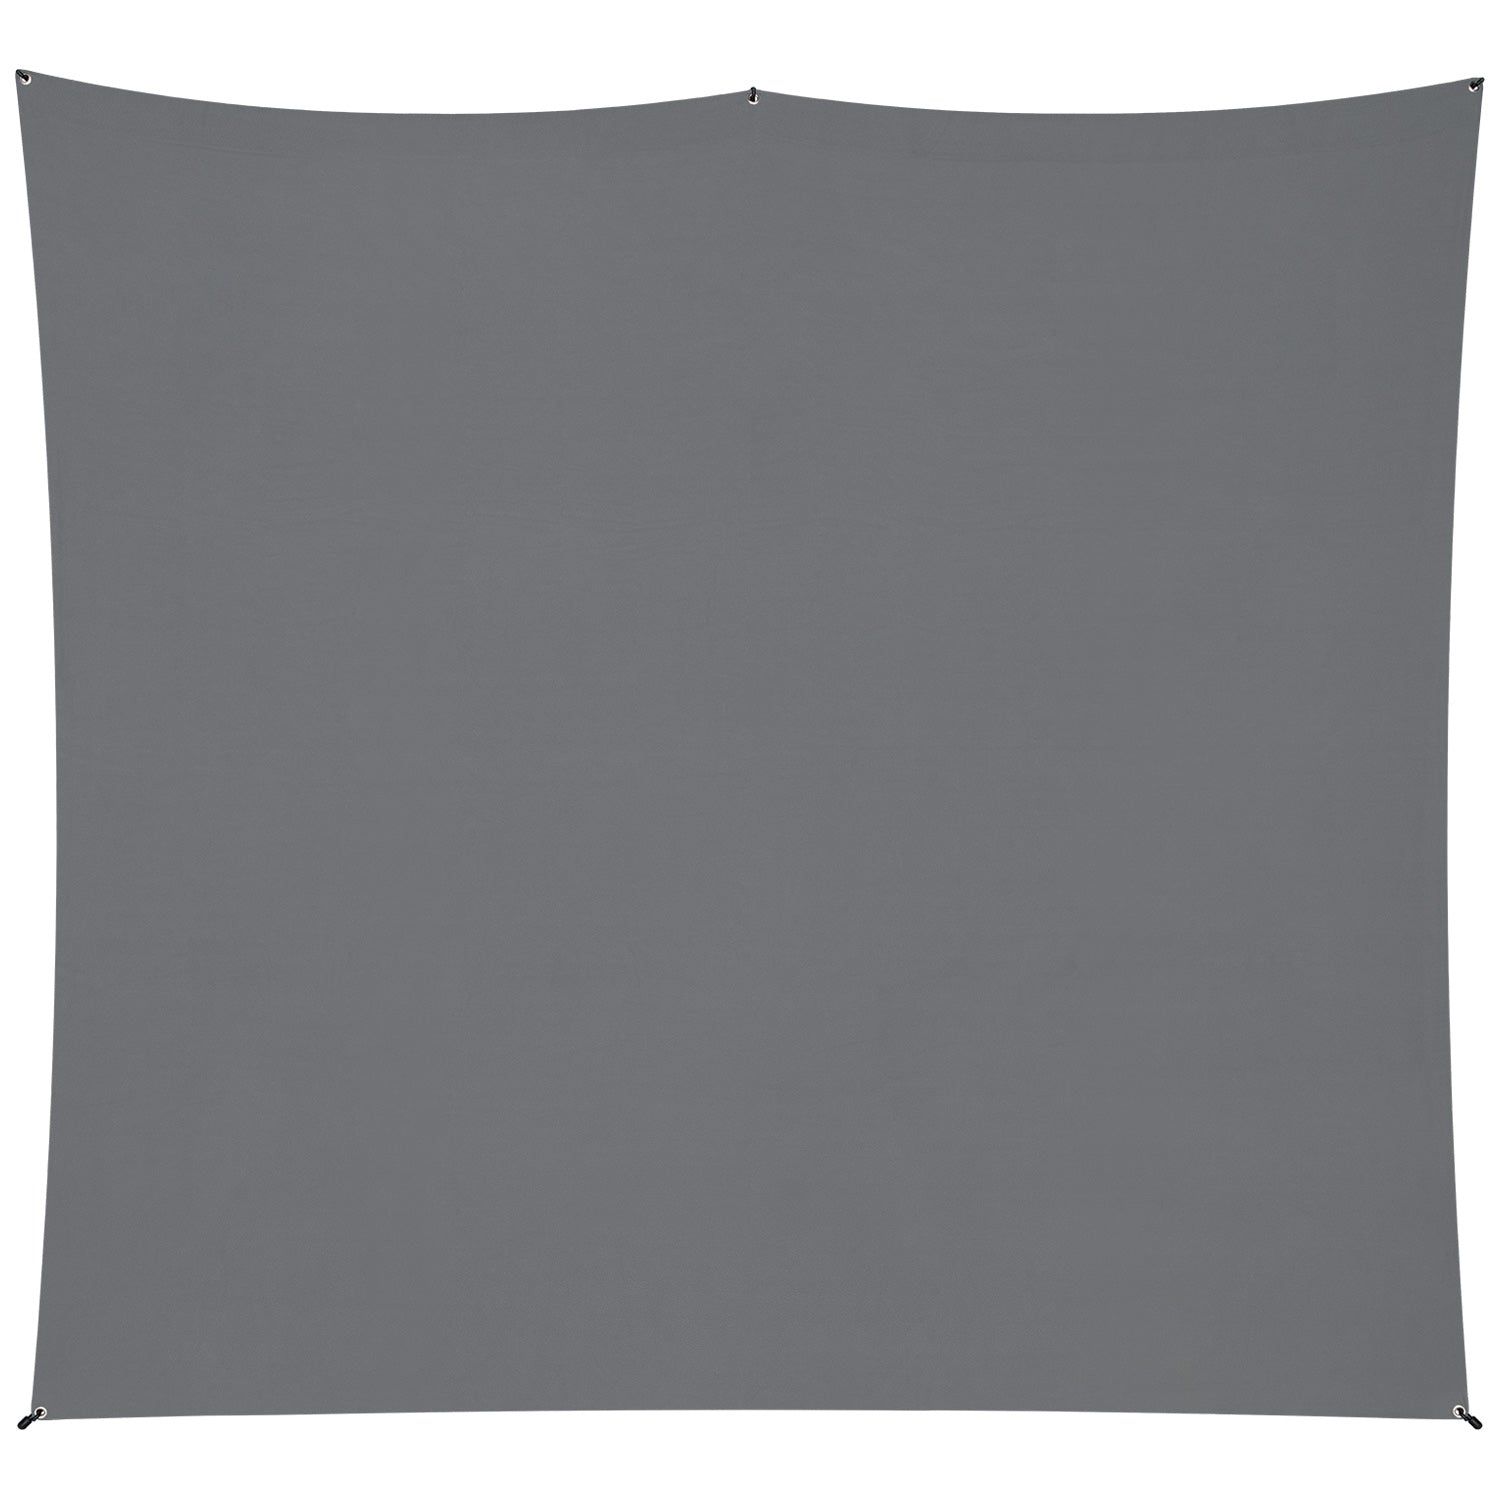 X-Drop Pro Wrinkle-Resistant Backdrop Kit - Neutral Gray (8' x 8')